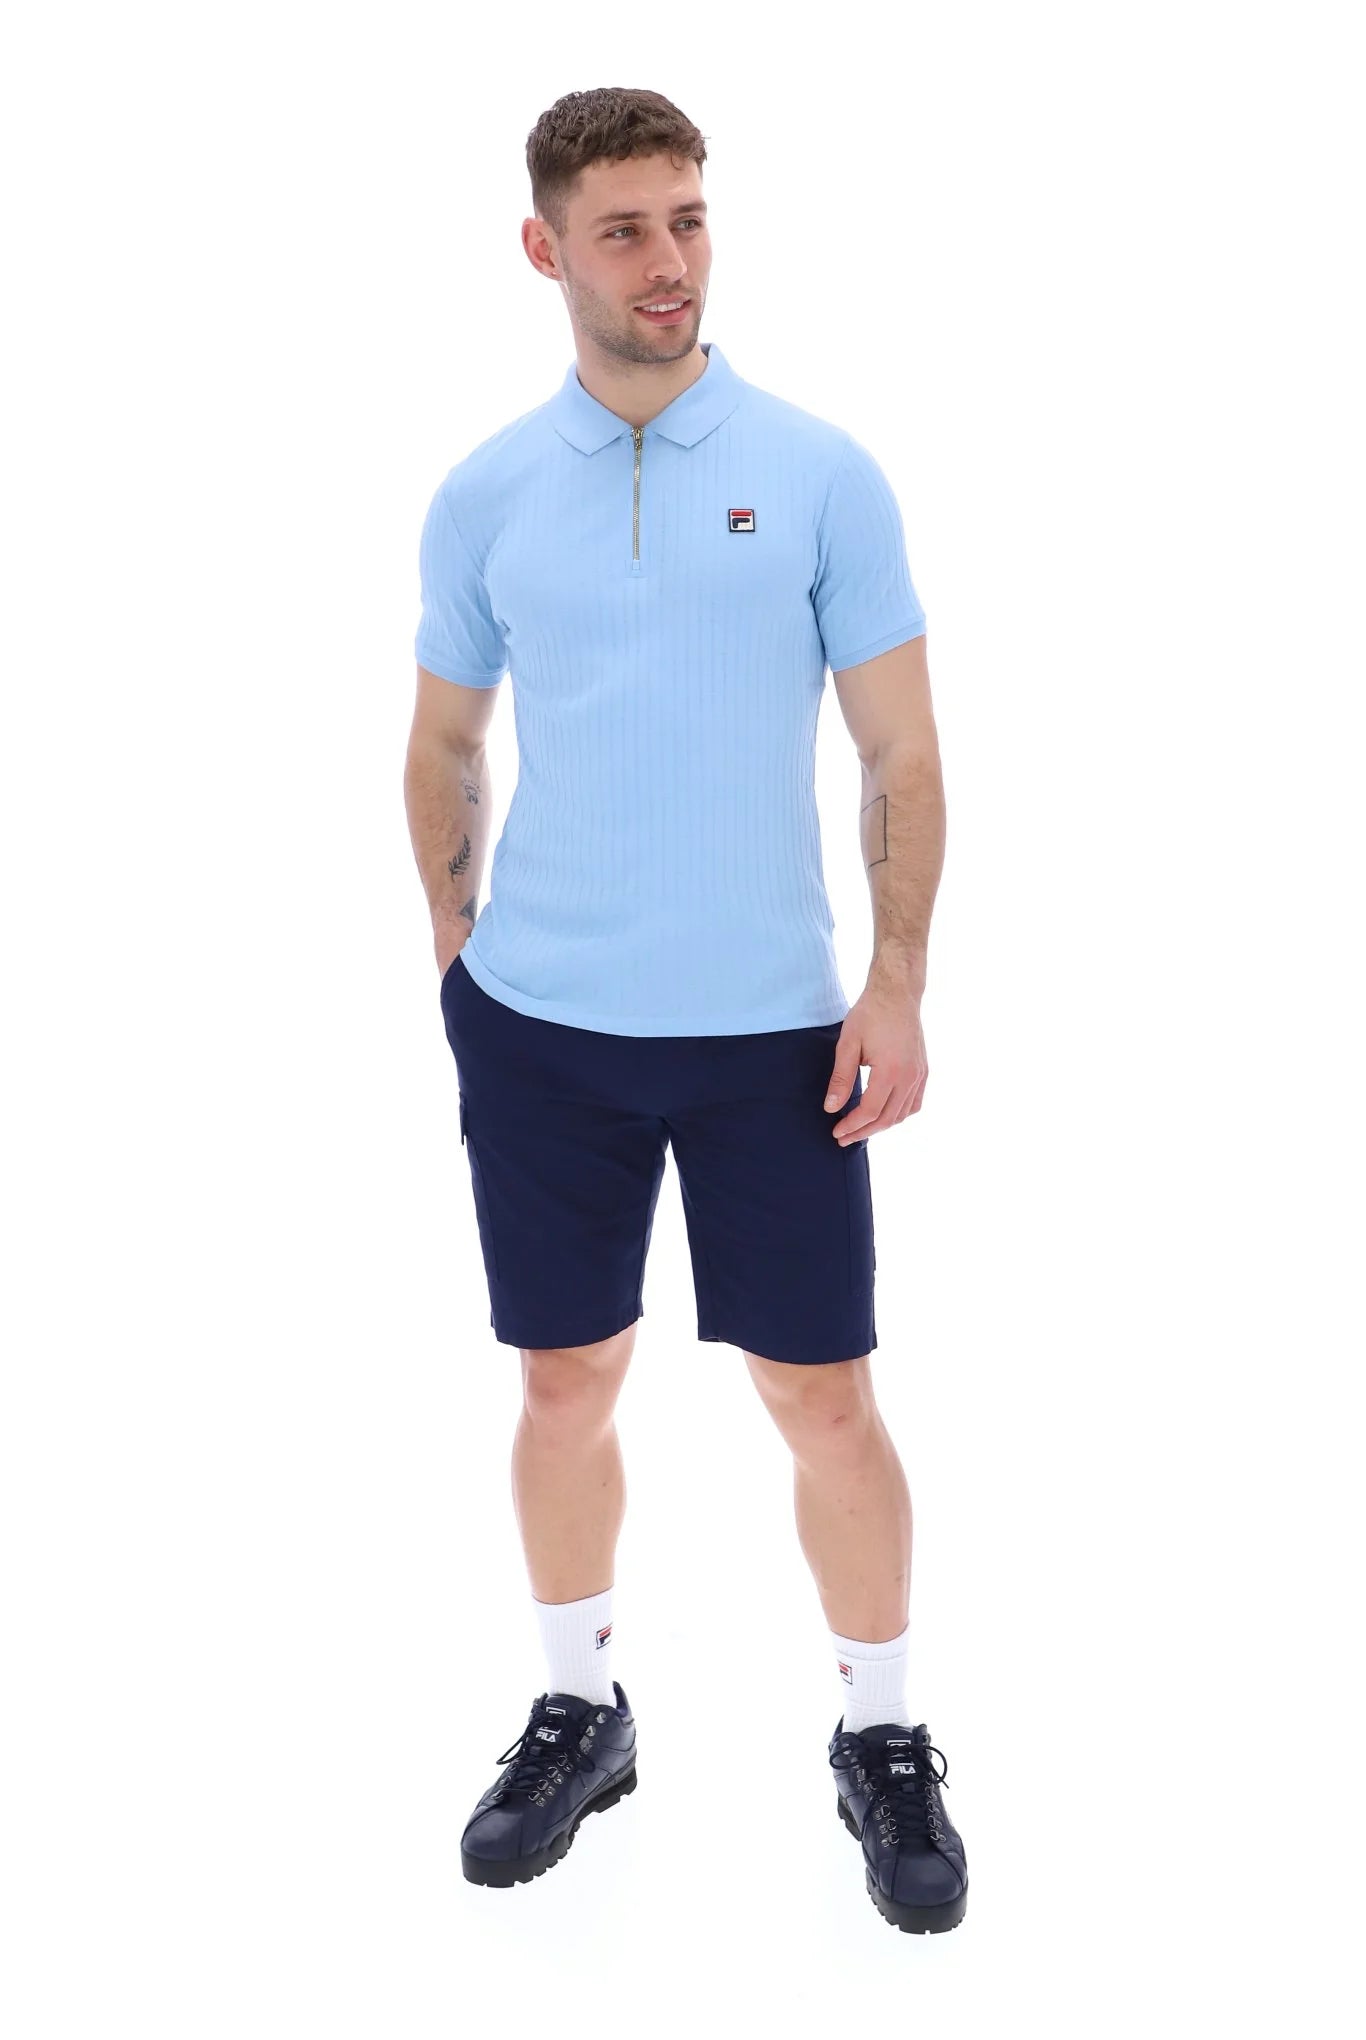 FILA Pannuci Slim Fit 1/4 Zip Polo Sky Blue - Raw Menswear